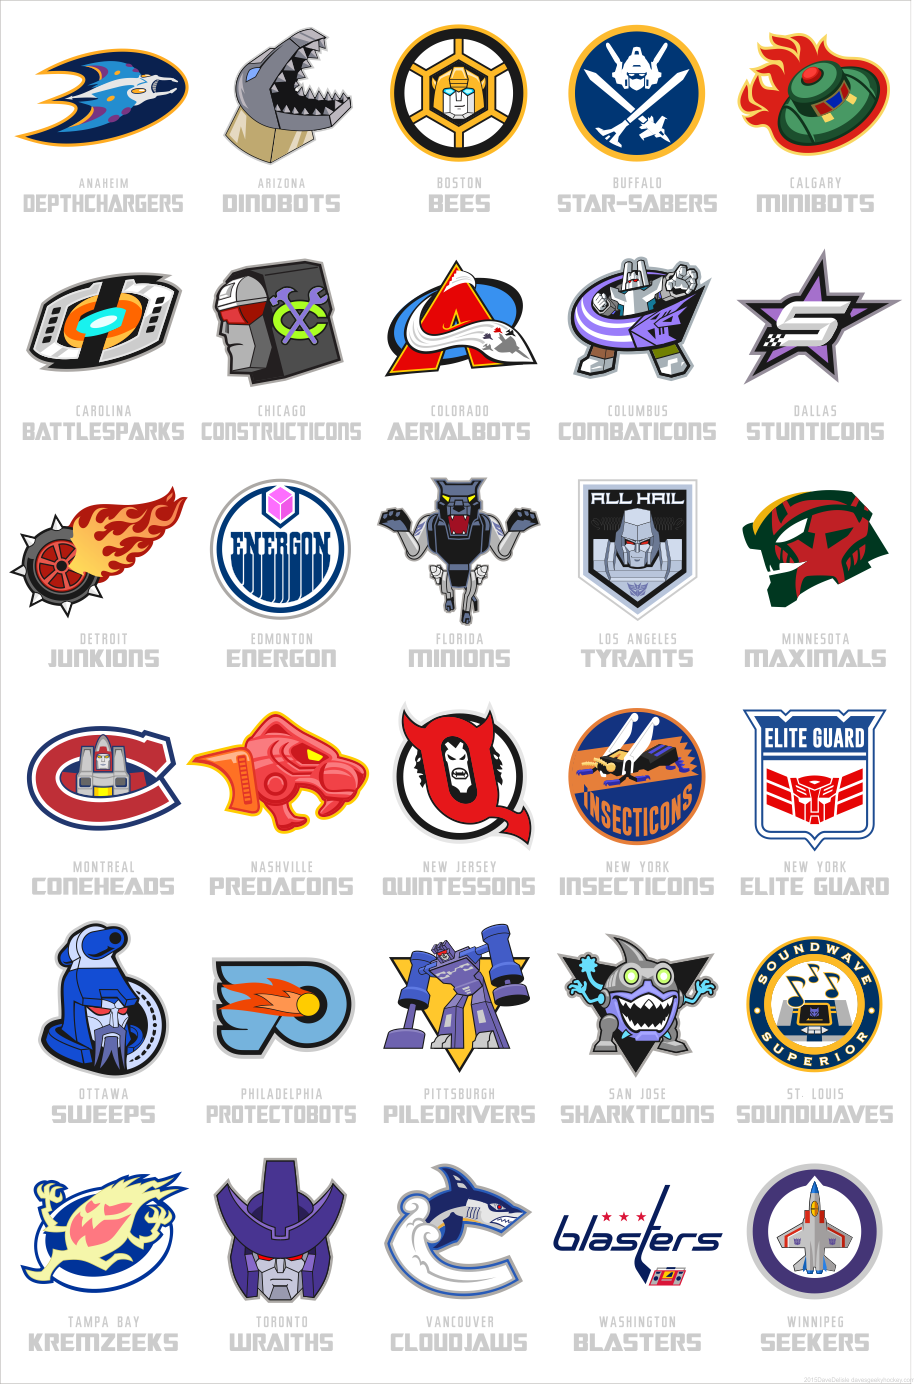 Логотипы команд нхл. NHL логотипы команд. Хоккейные команды NHL. Хоккейные клубы НХЛ эмблемы и названия на русском. Значки команд НХЛ С названиями.